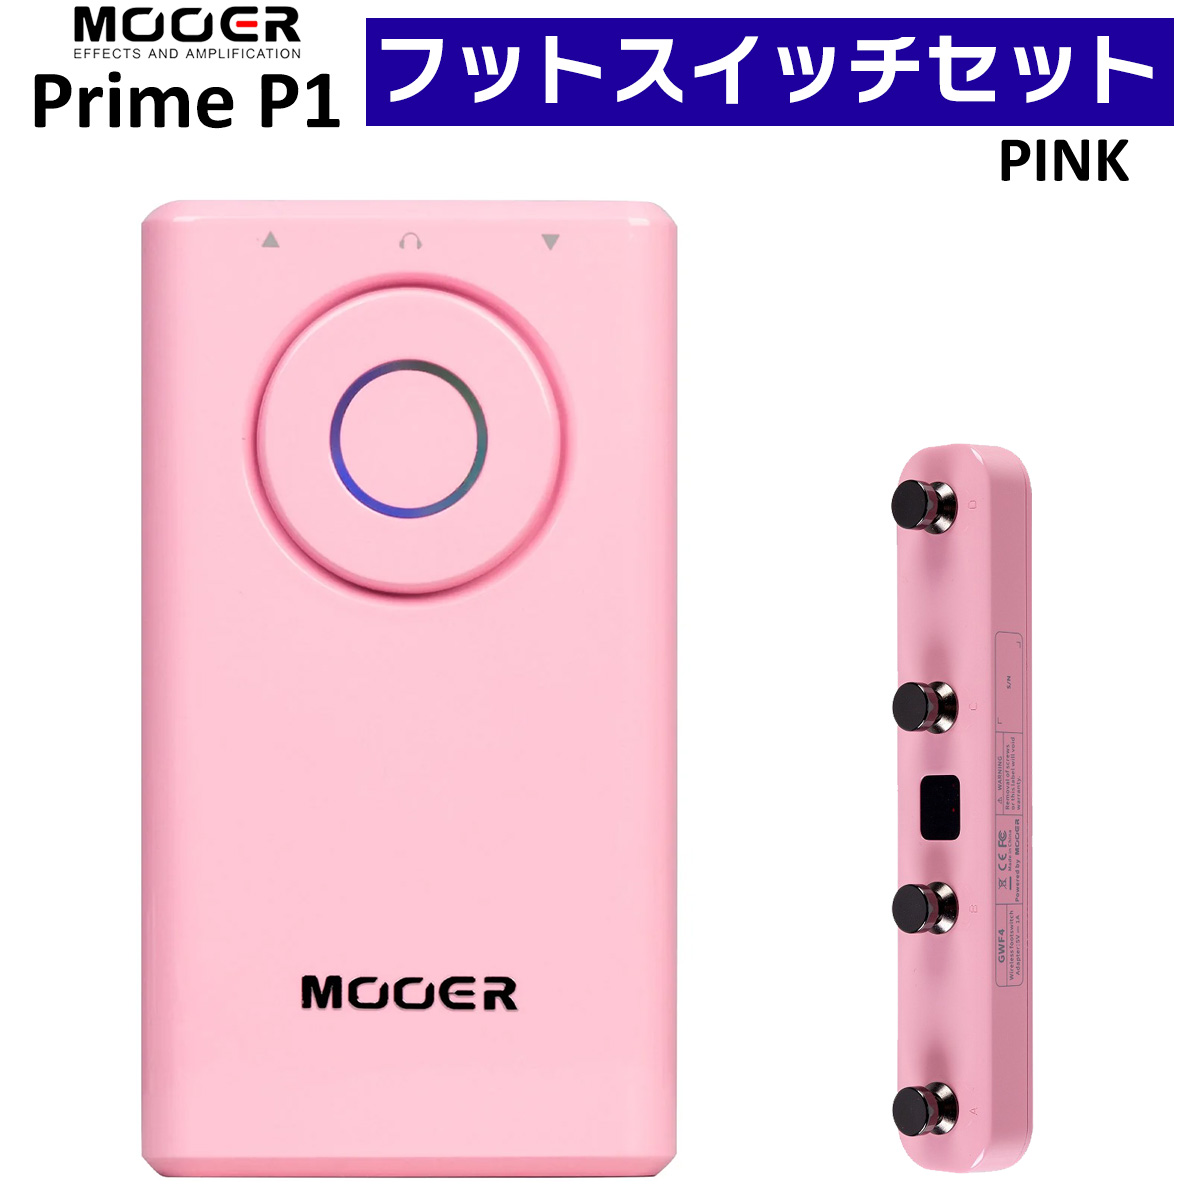 MOOER Prime P1 PINK + GWF4 フットスイッチセット 超小型マルチ